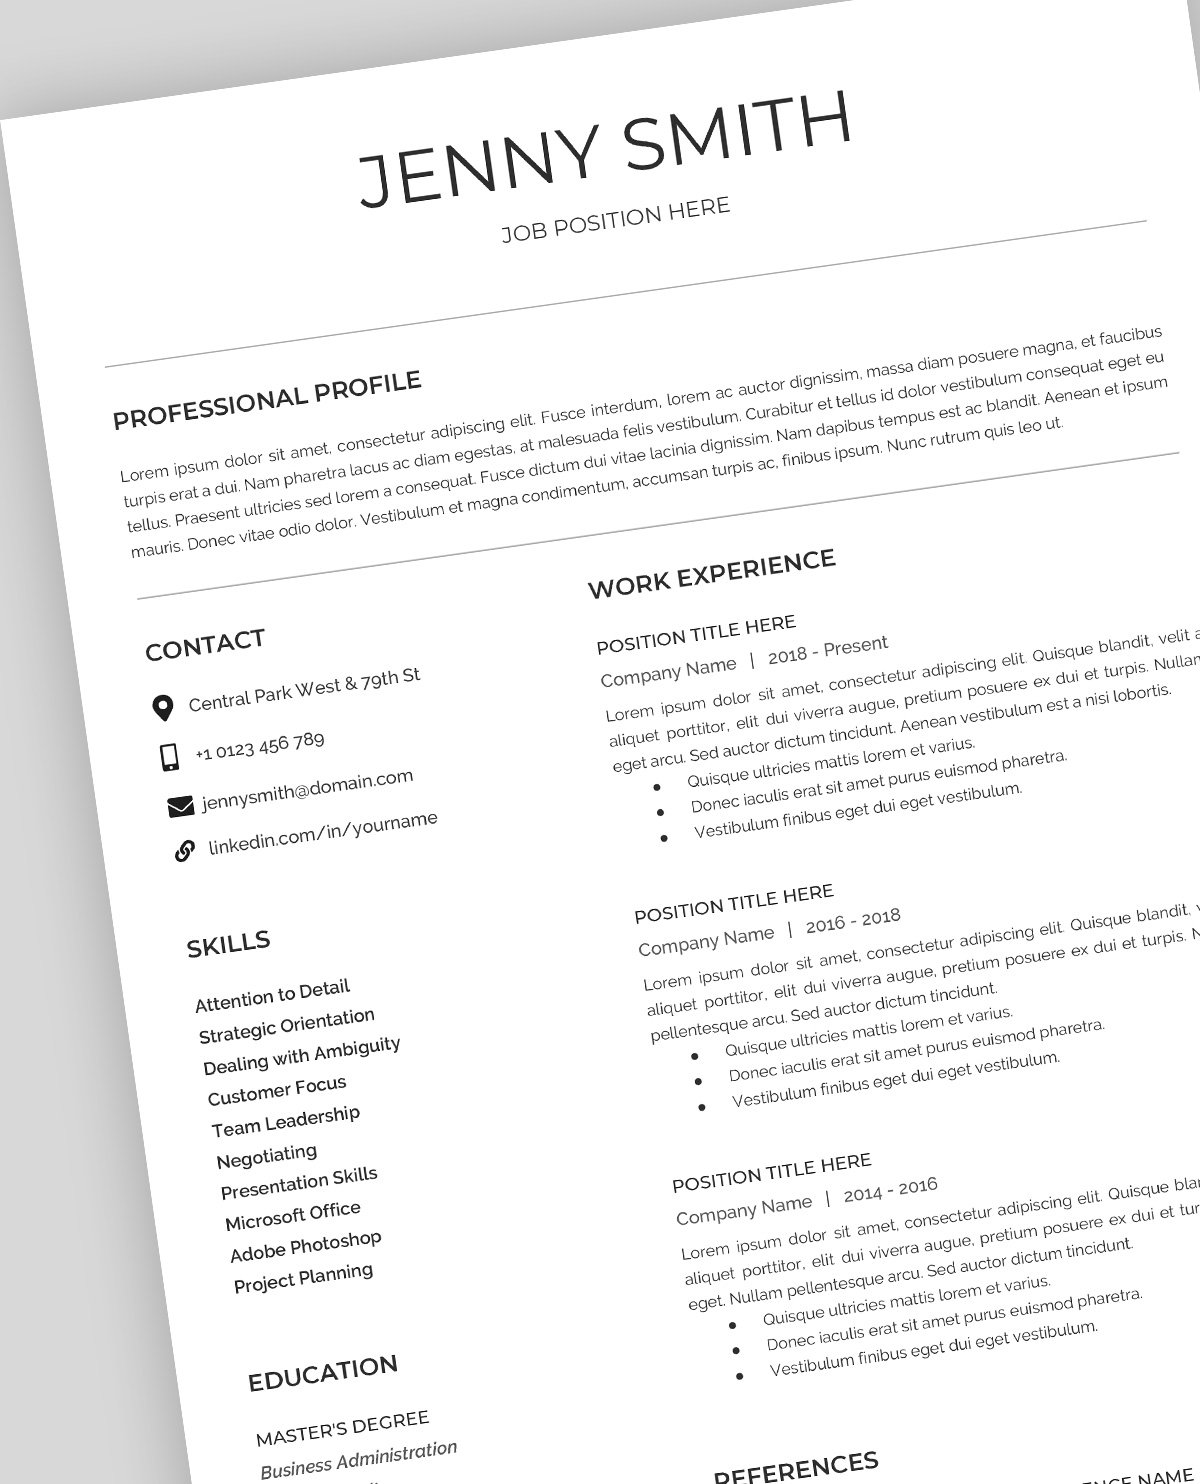 Resume Template, CV, Google Docs preview image.